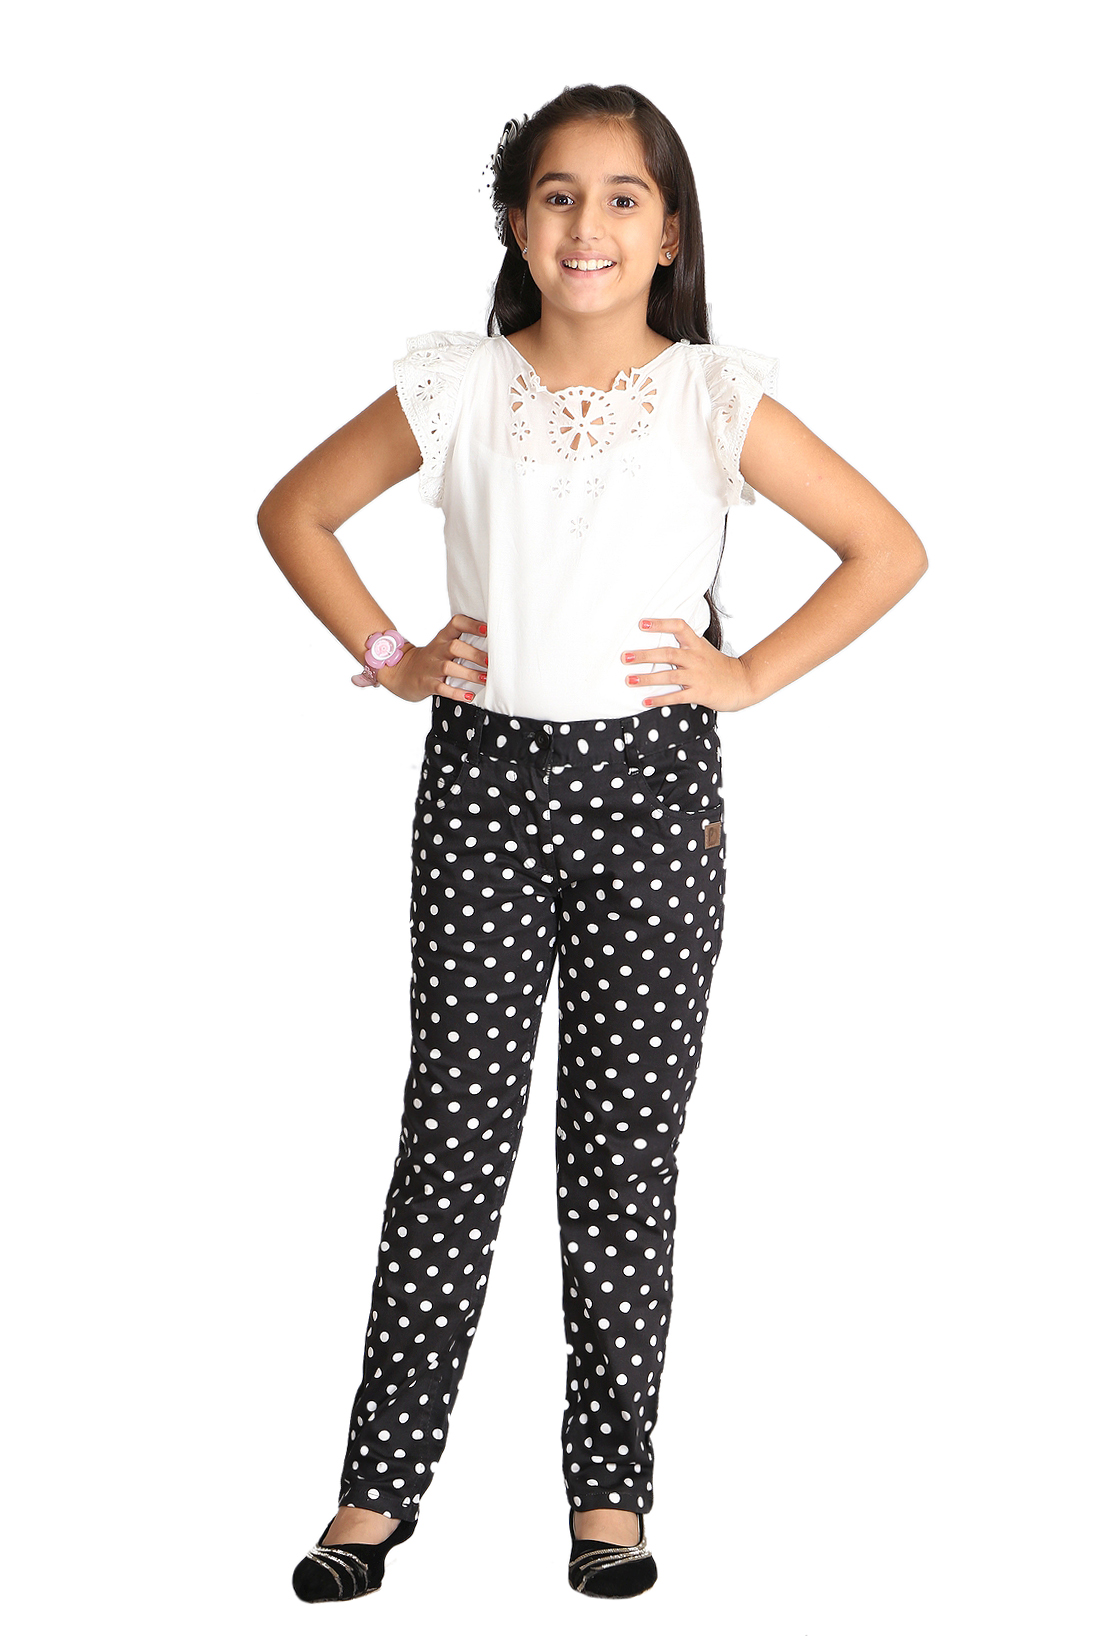 Girls Cotton Trousers - Buy Girls Cotton Trousers online in India